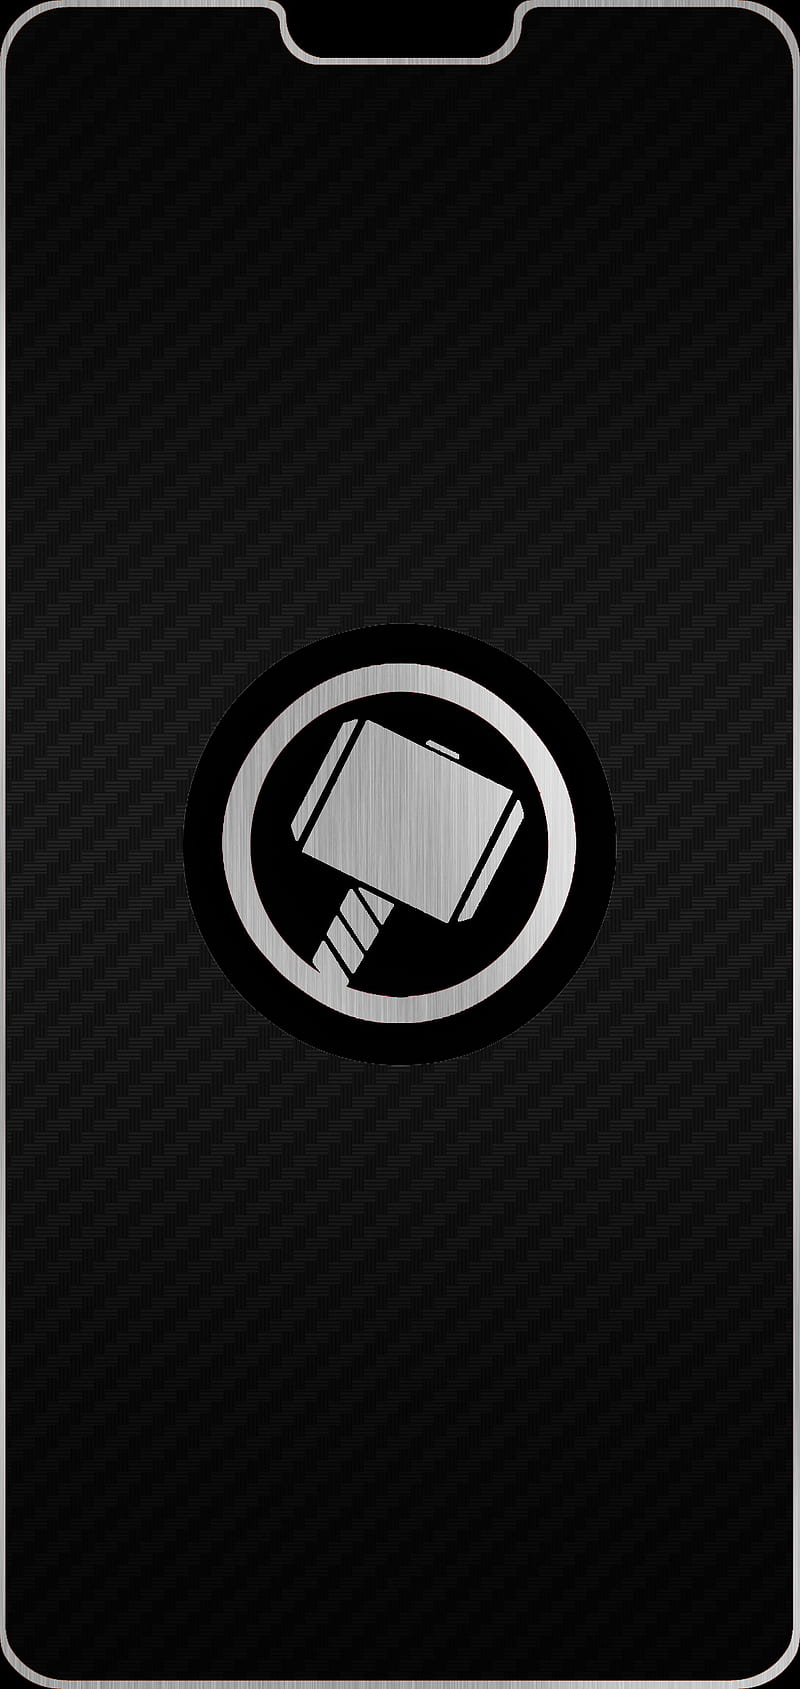 Thor Logo Digital Download, Instant Download, Svg, Dxf, Eps & Png Files  Included - Etsy